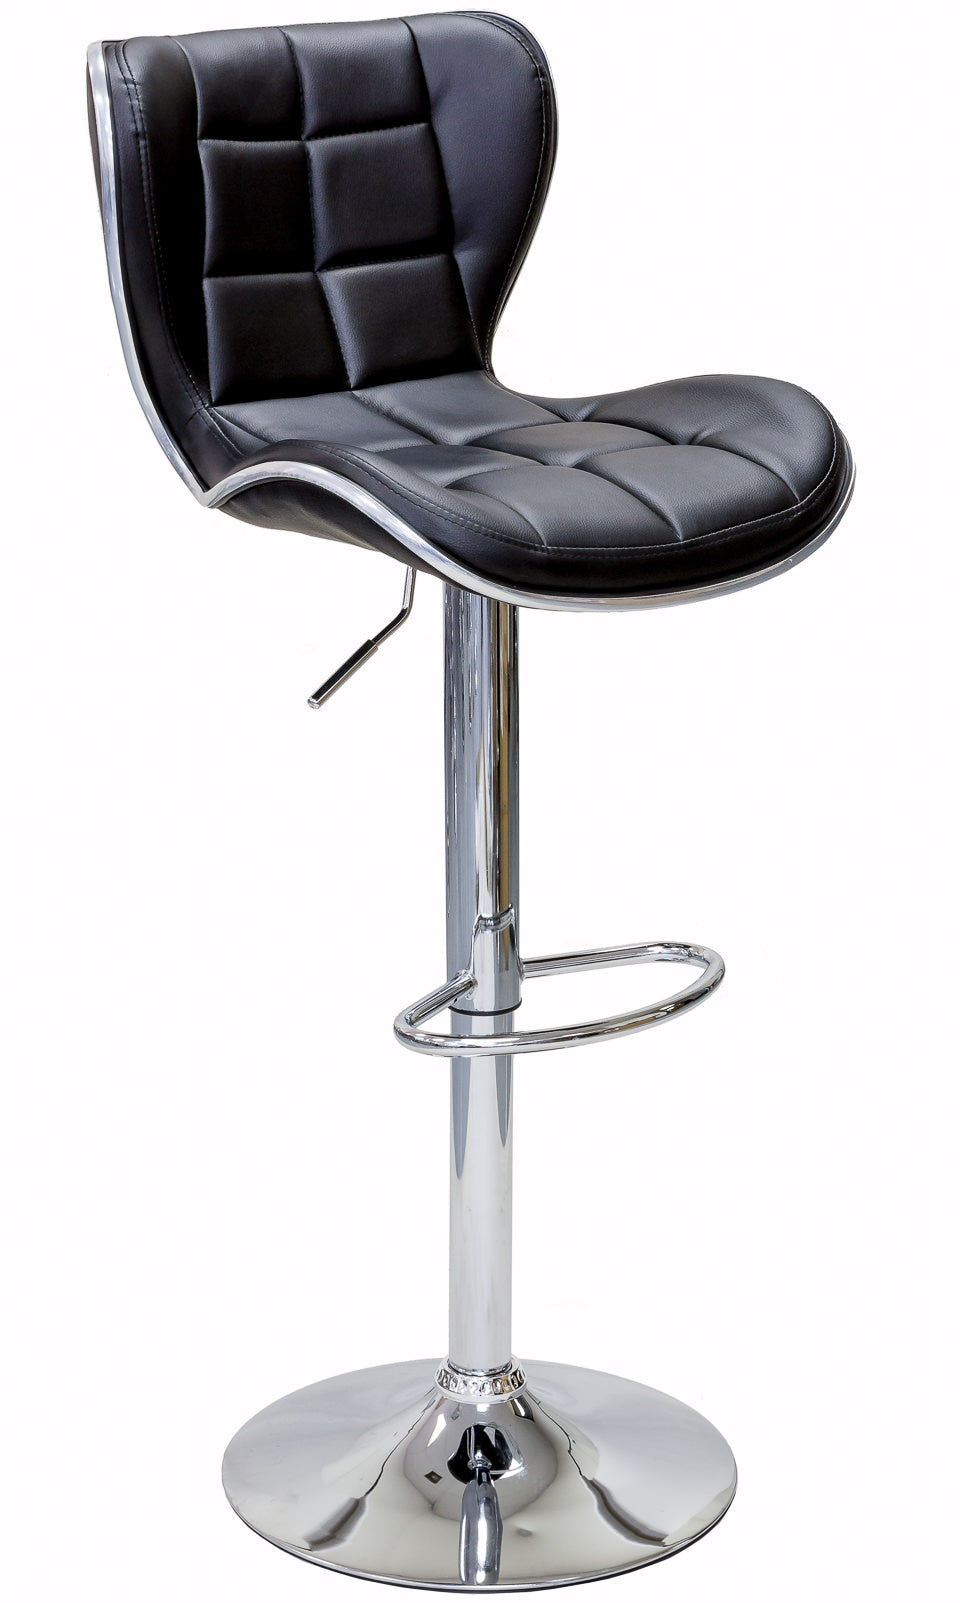 ViscoLogic DUKE High-Back Height Adjustable Swivel PU Leather Bar Stools (Set of 2 stools)